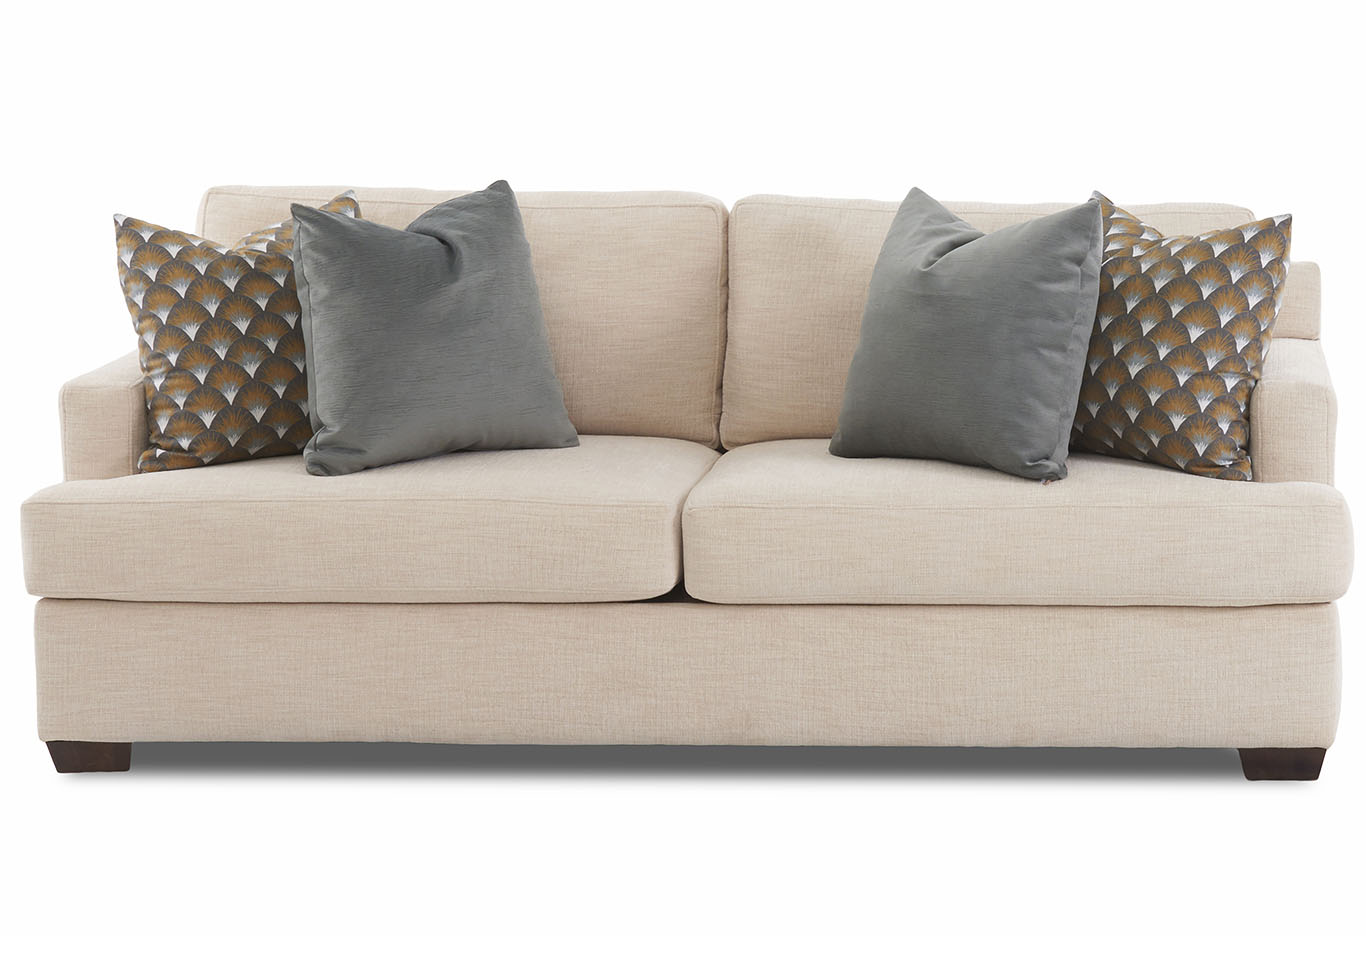 Karalynn Ivory Stationary Fabric Sofa,Klaussner Home Furnishings